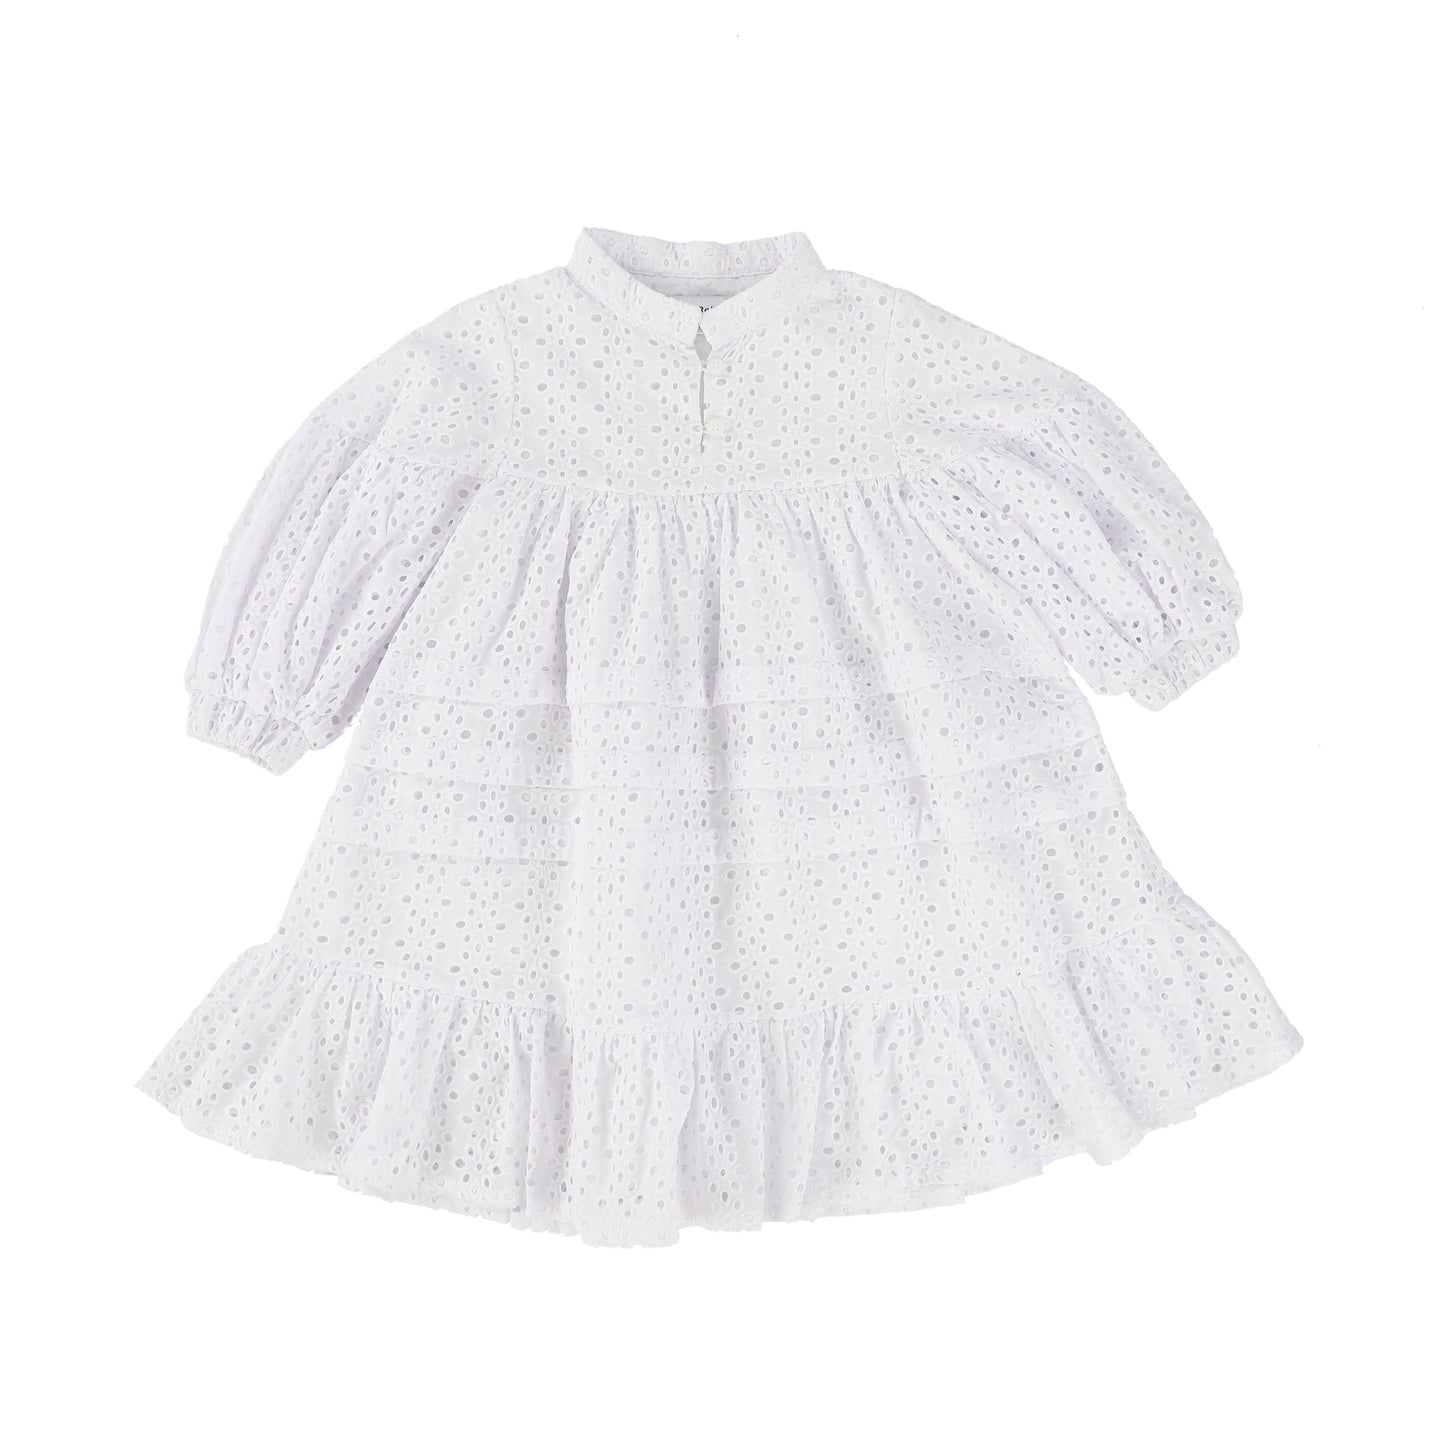 OLIVIA ROHDE WHITE EYELET TEIRED DRESS [Final Sale]